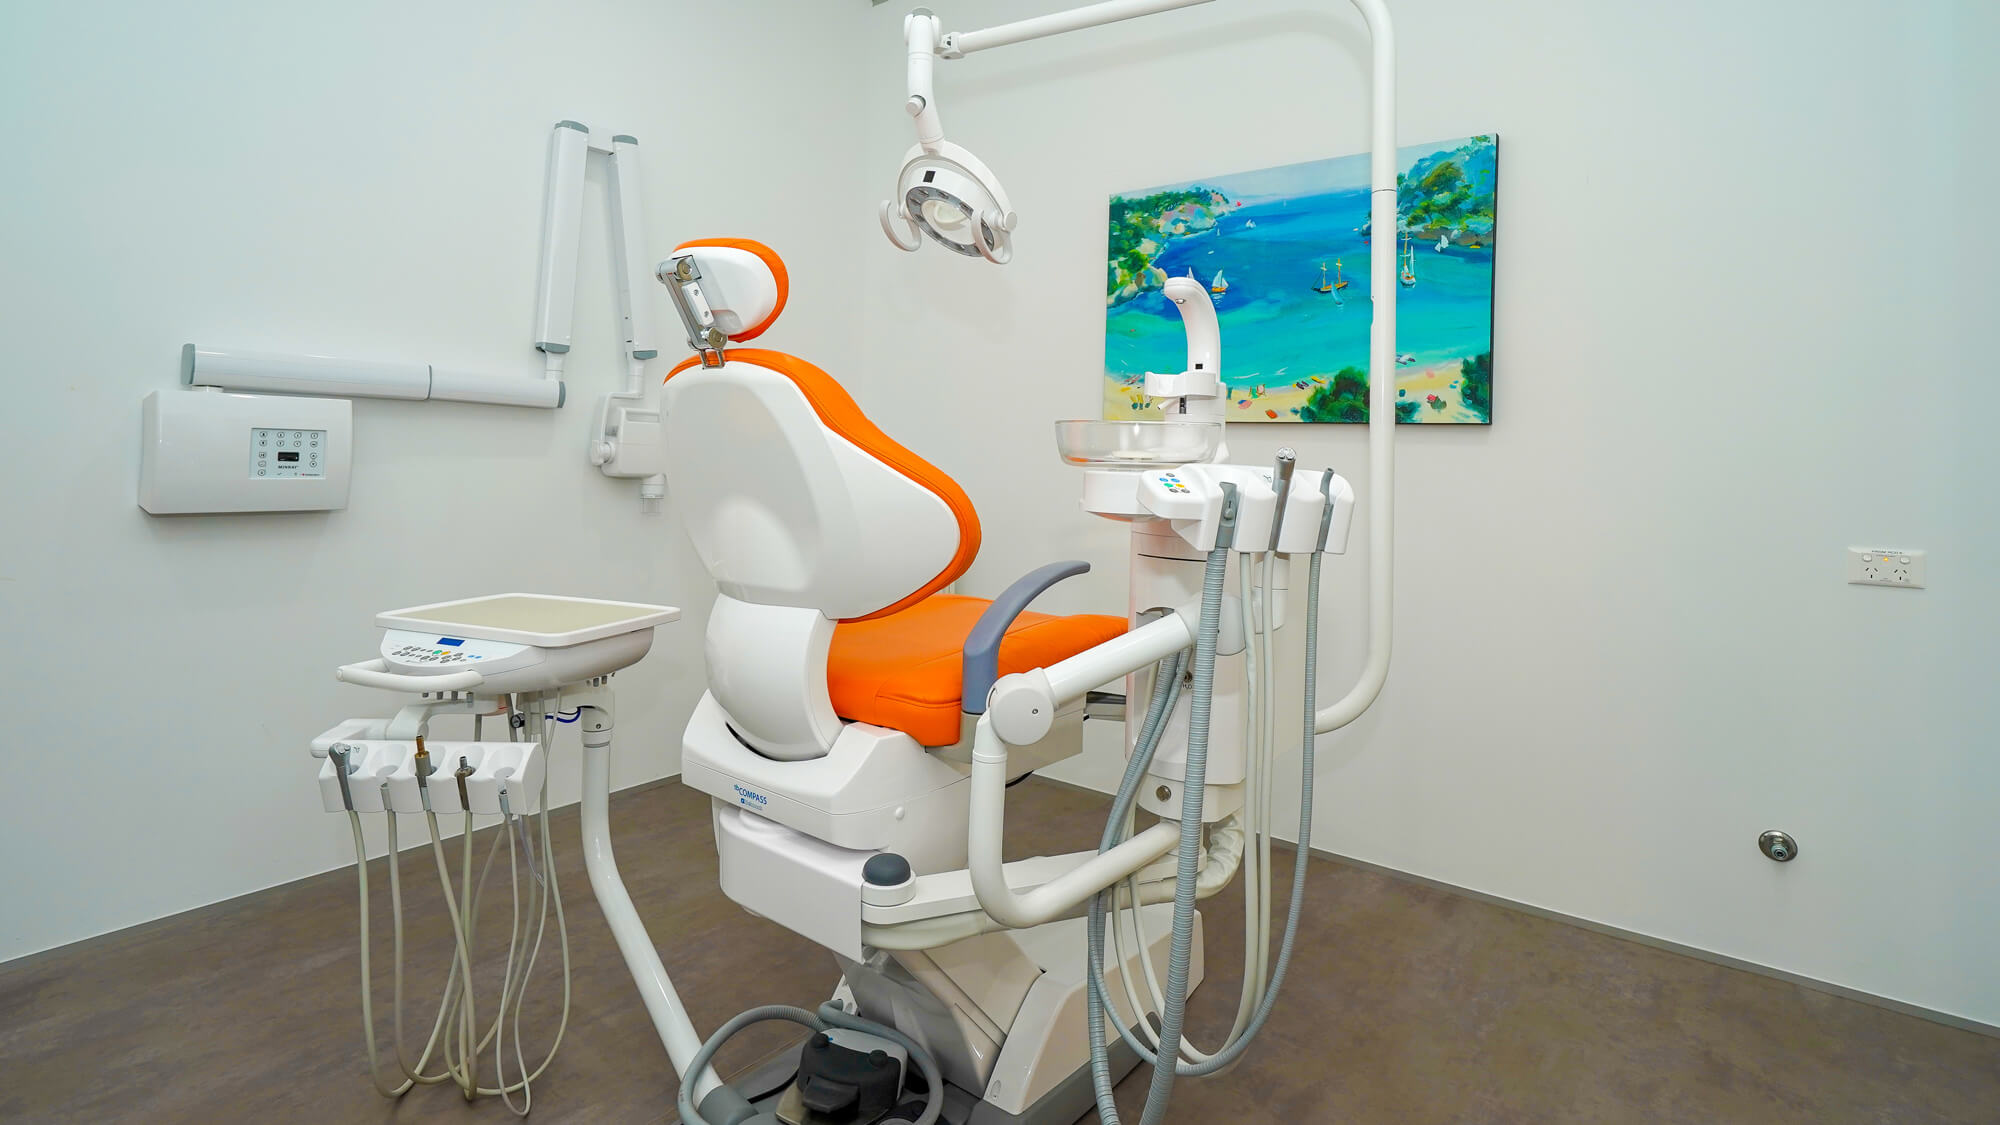 Dental surgery room layout